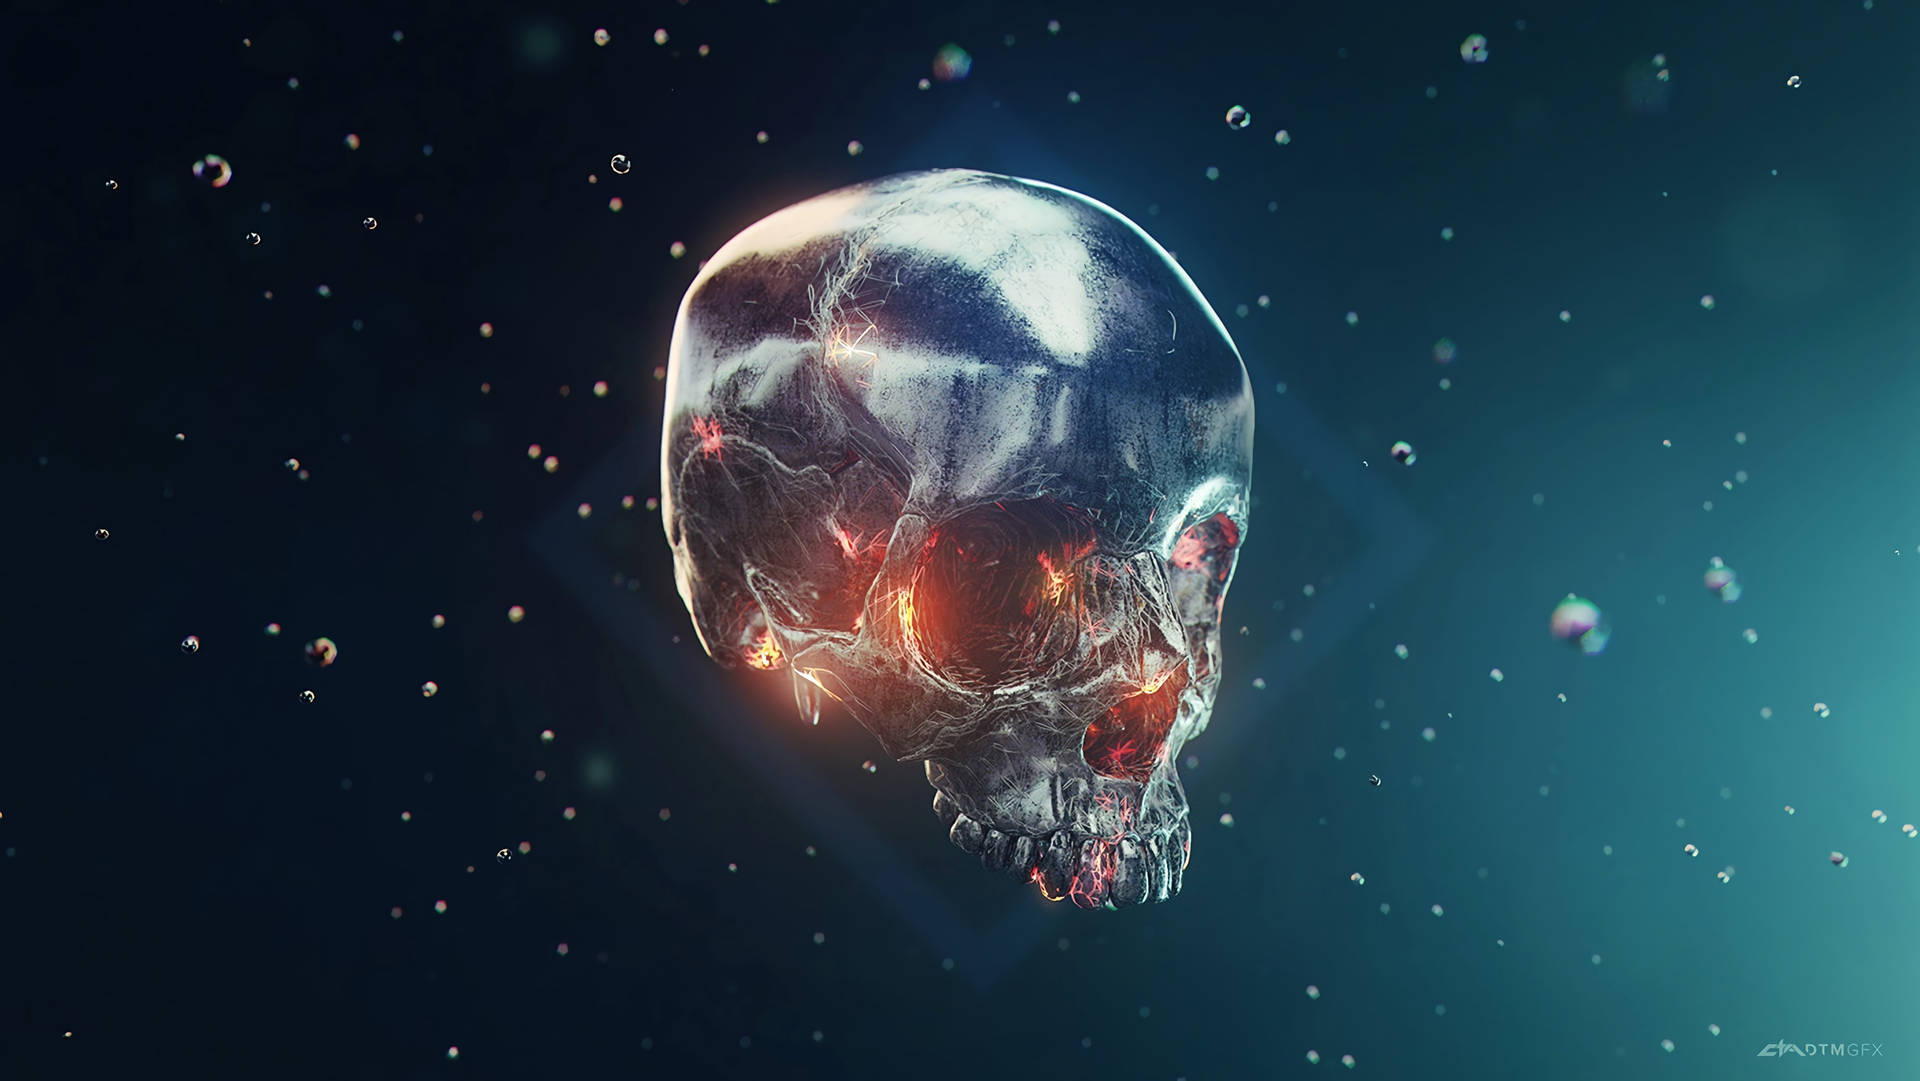 Top 999+ Skull Wallpaper Full HD, 4K✅Free to Use